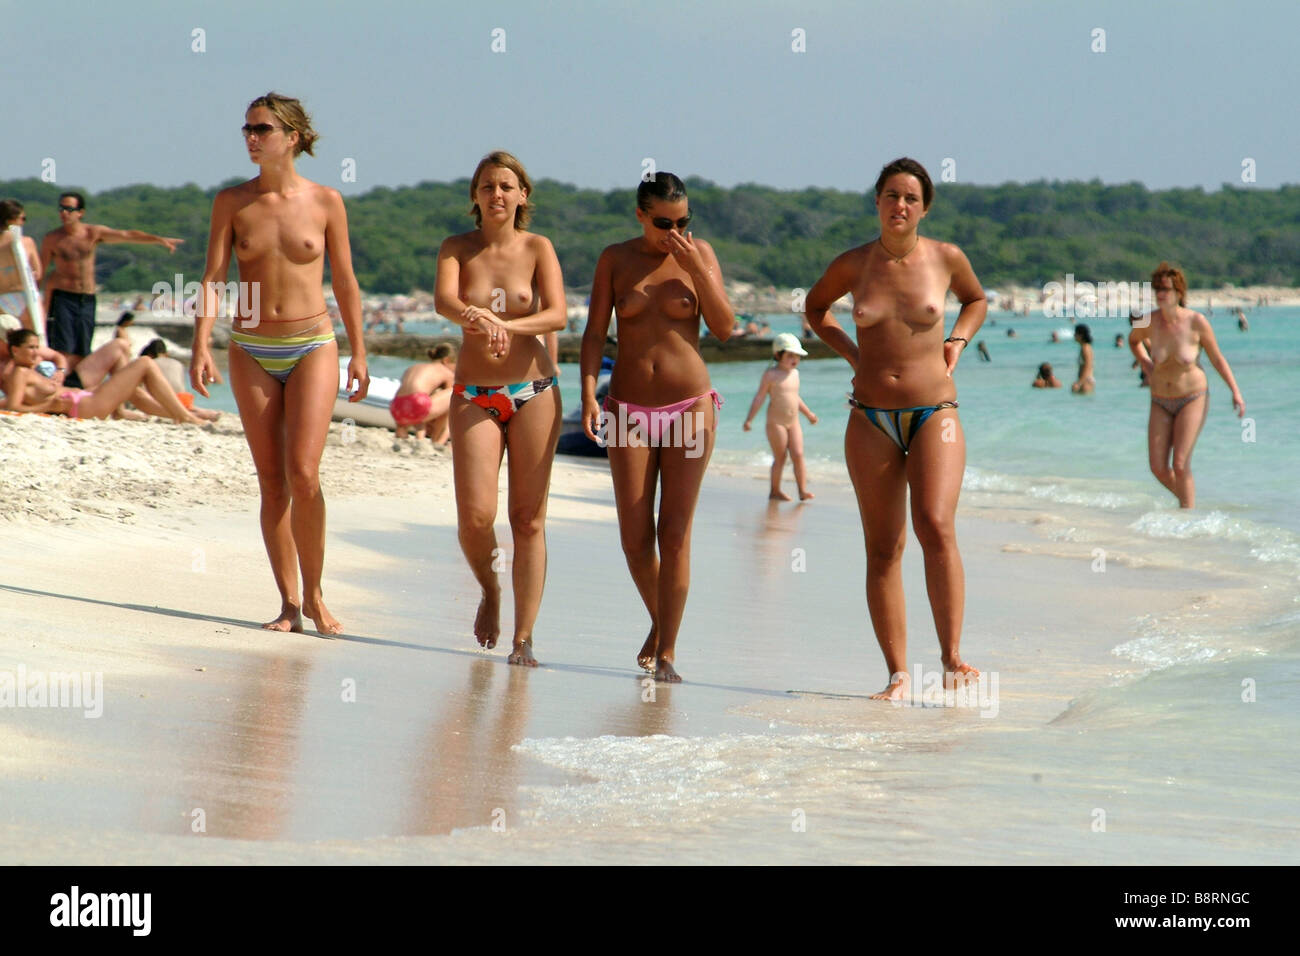 Beach group nude